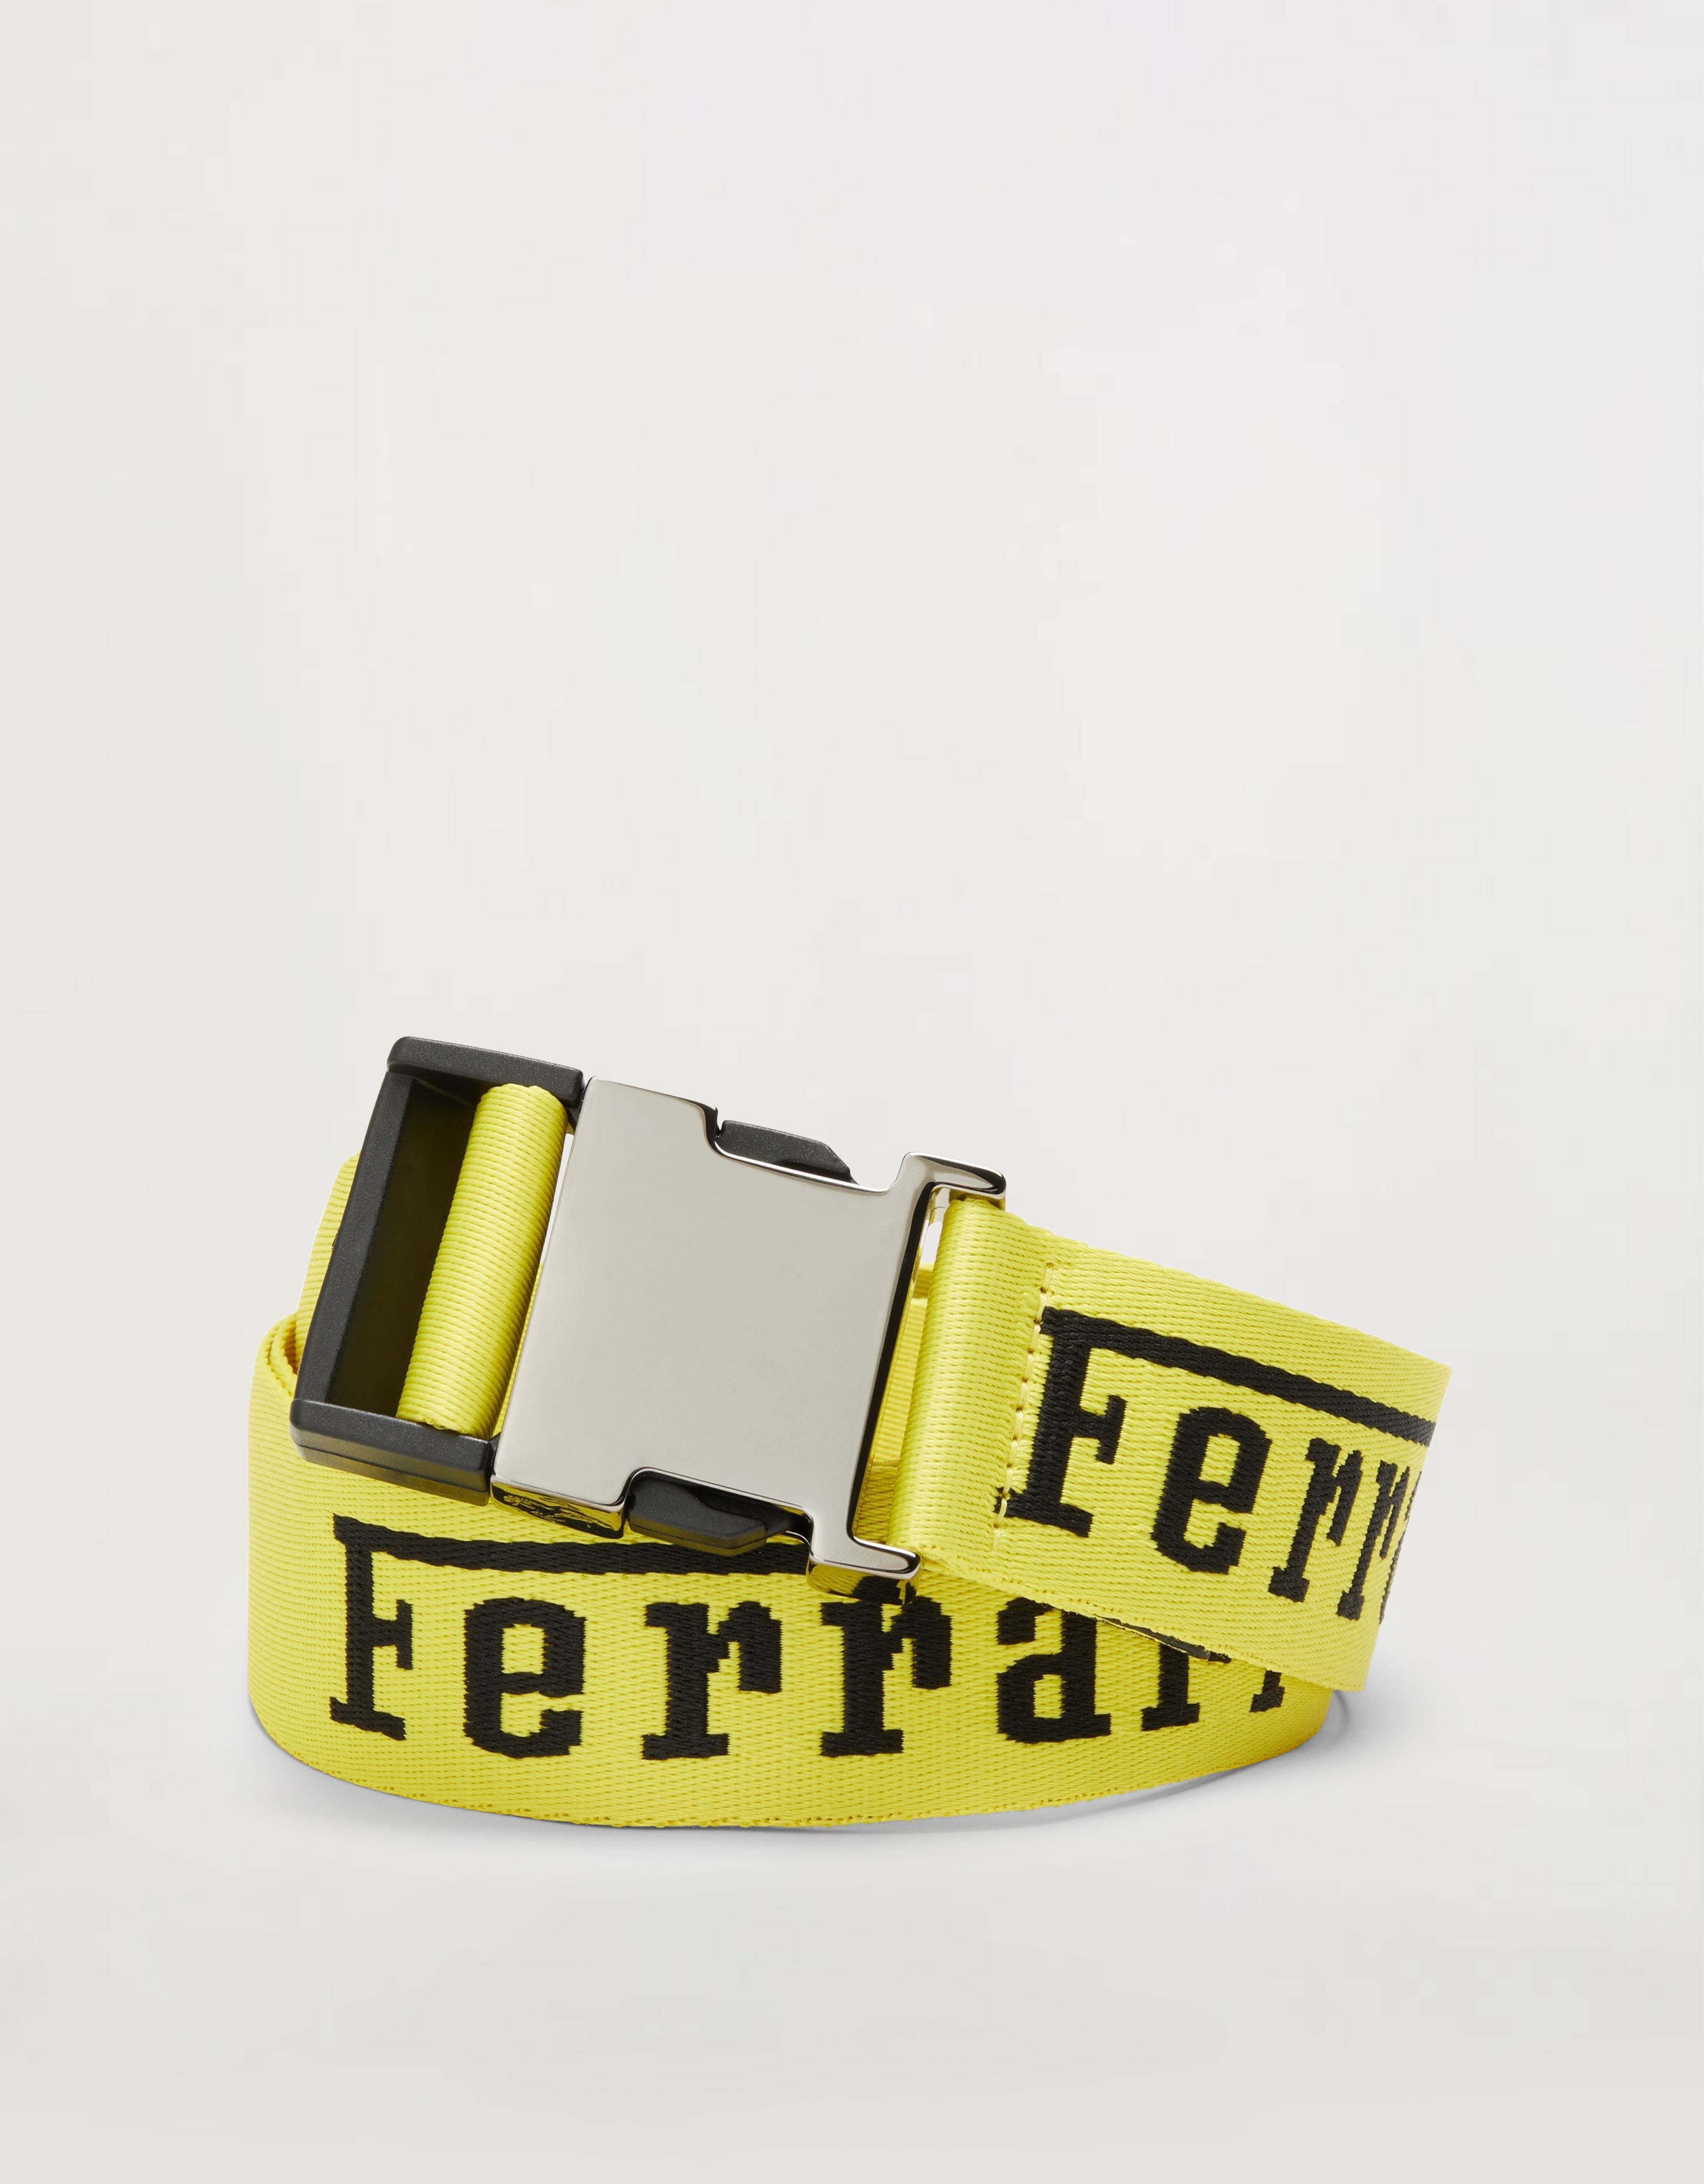 Ferrari Tape belt with Ferrari logo Total Black 20308f